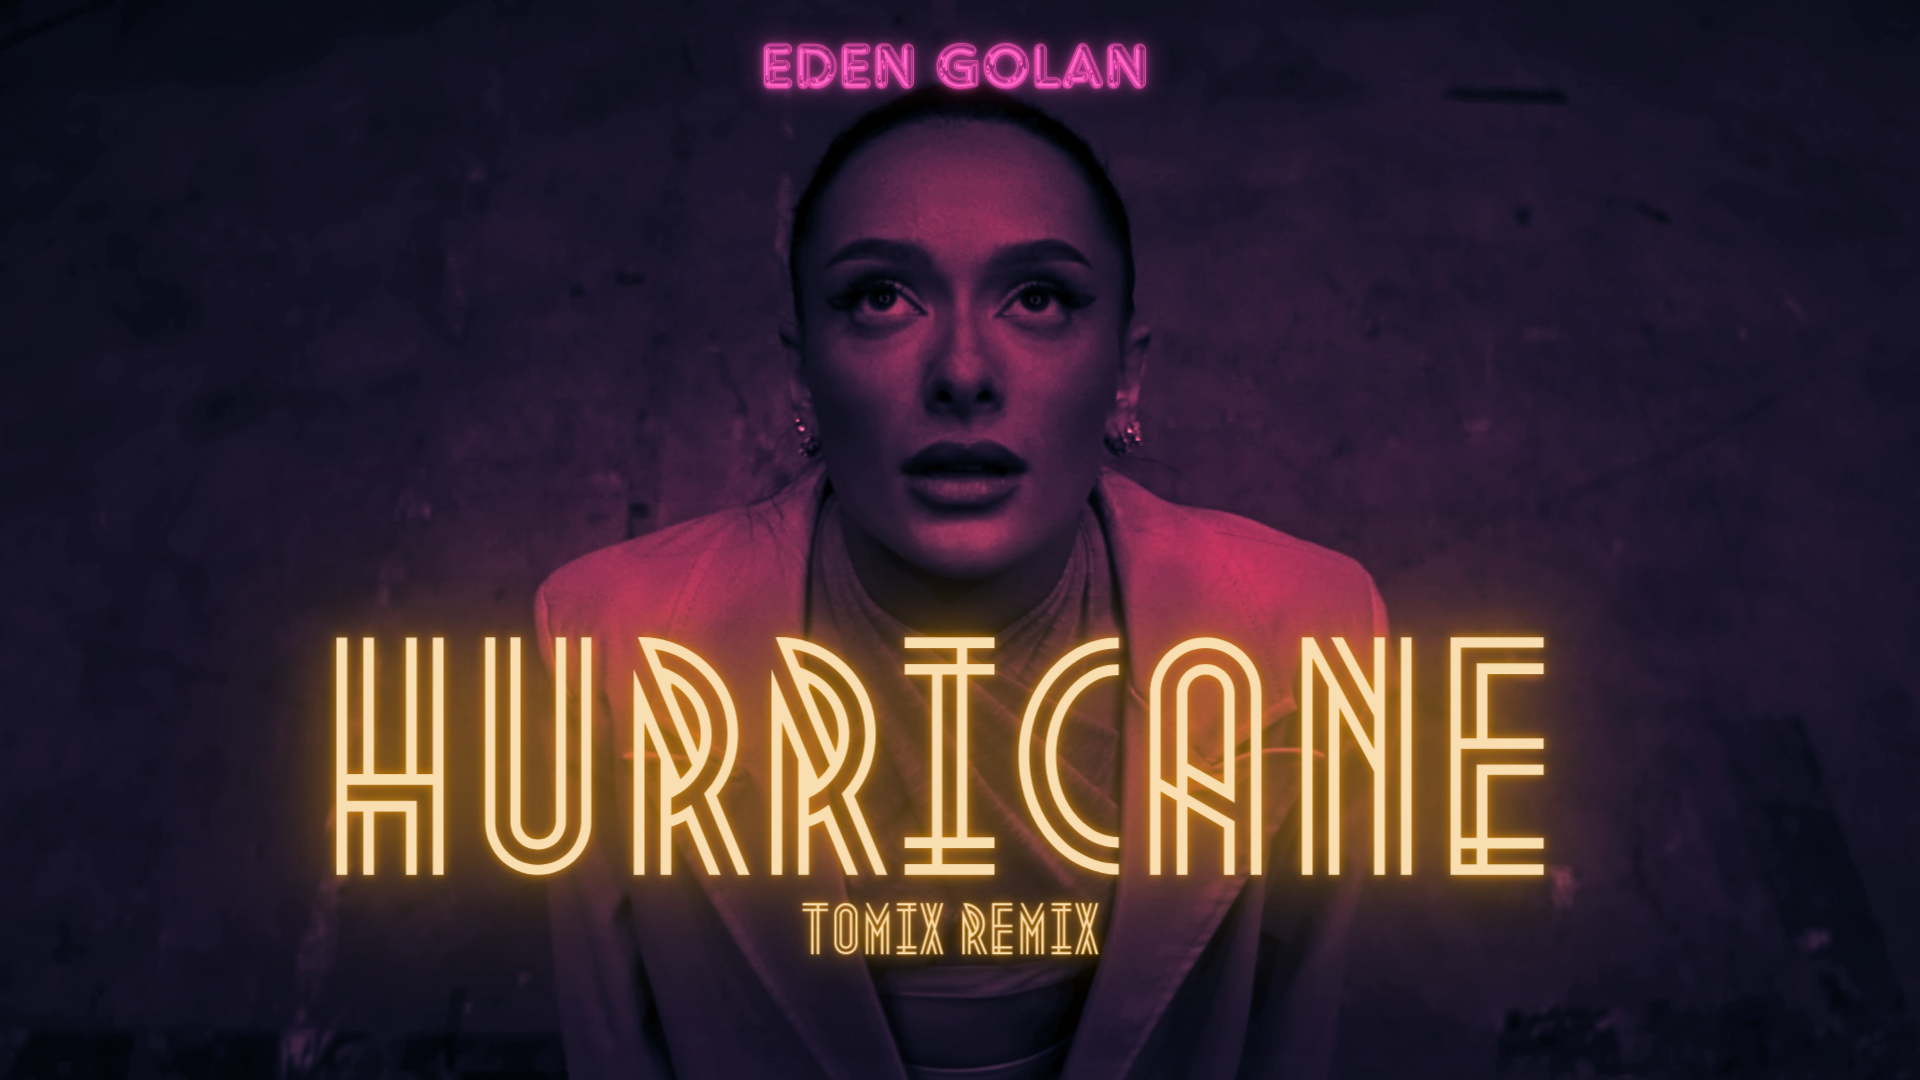 Eden Golan - Hurricane (ToMix Remix) - ART 1920x1080